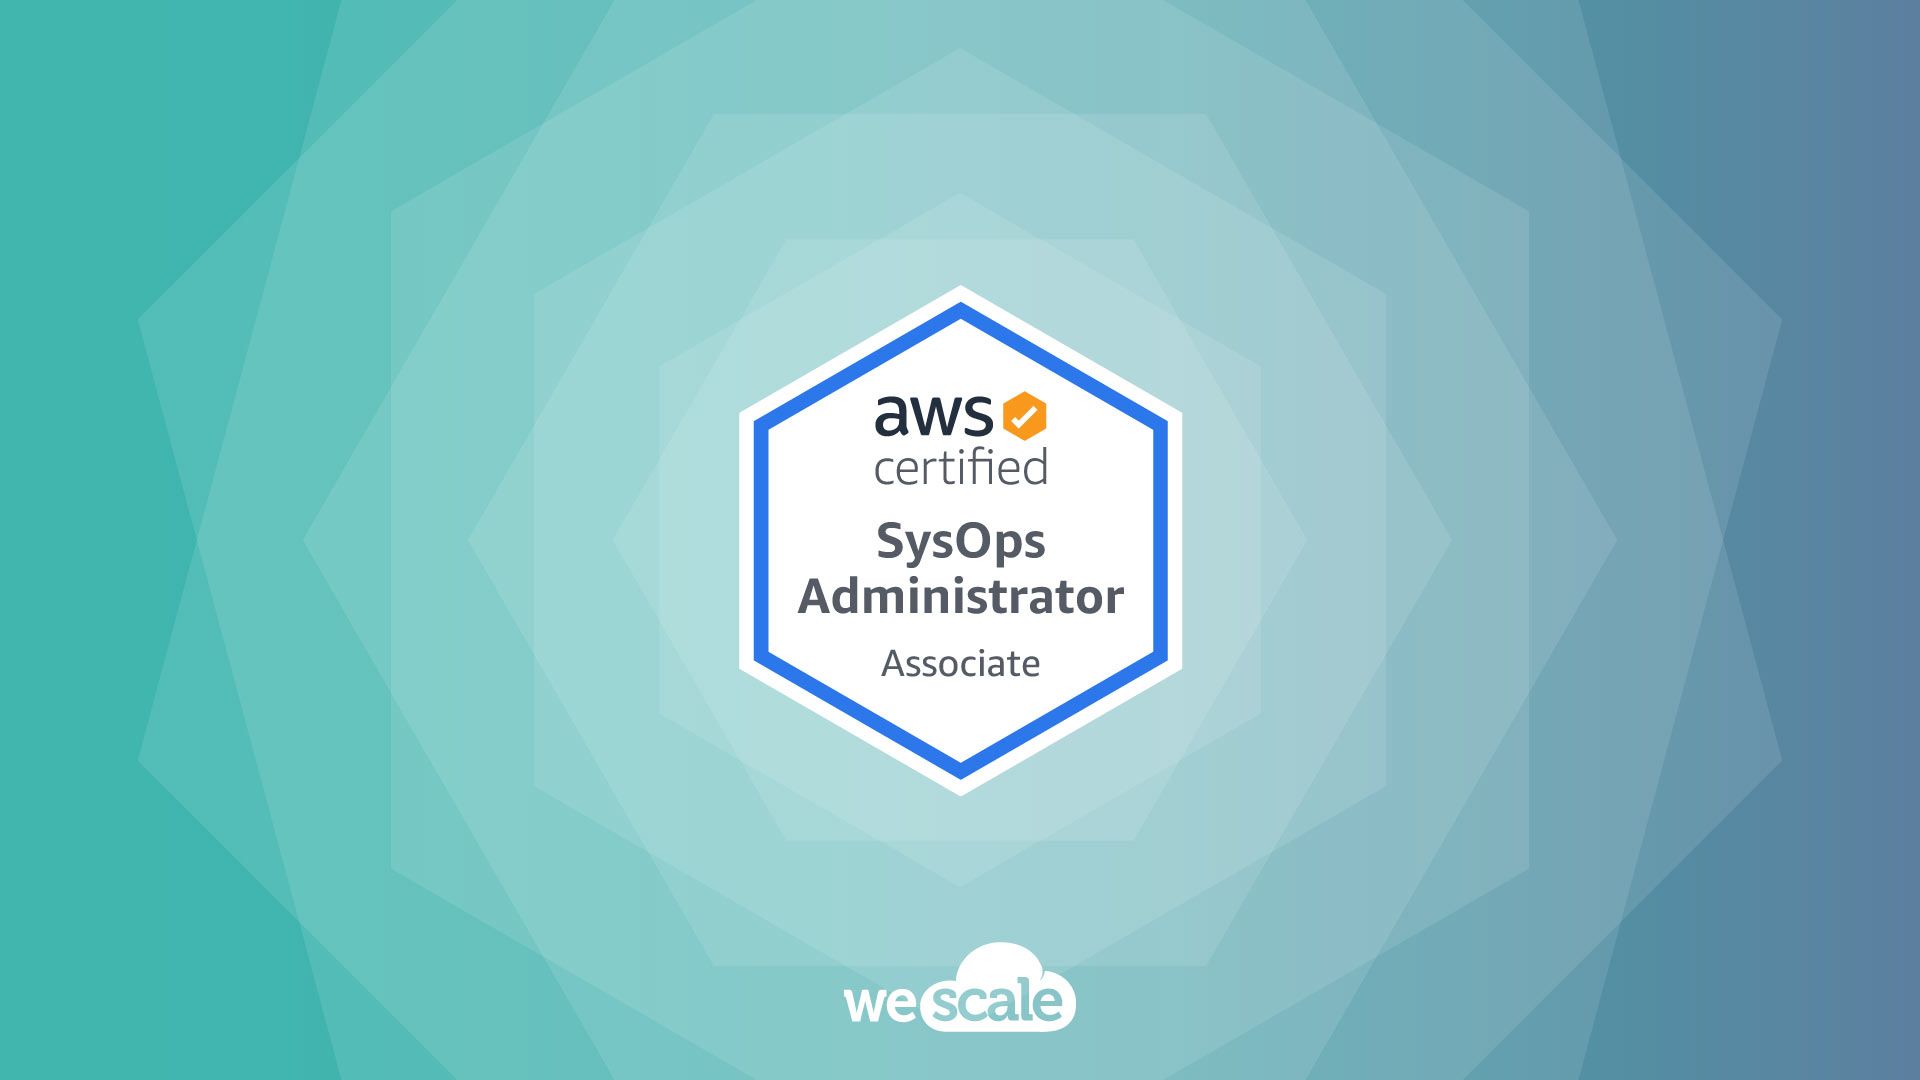 Comment réussir sa certification AWS SysOps ?